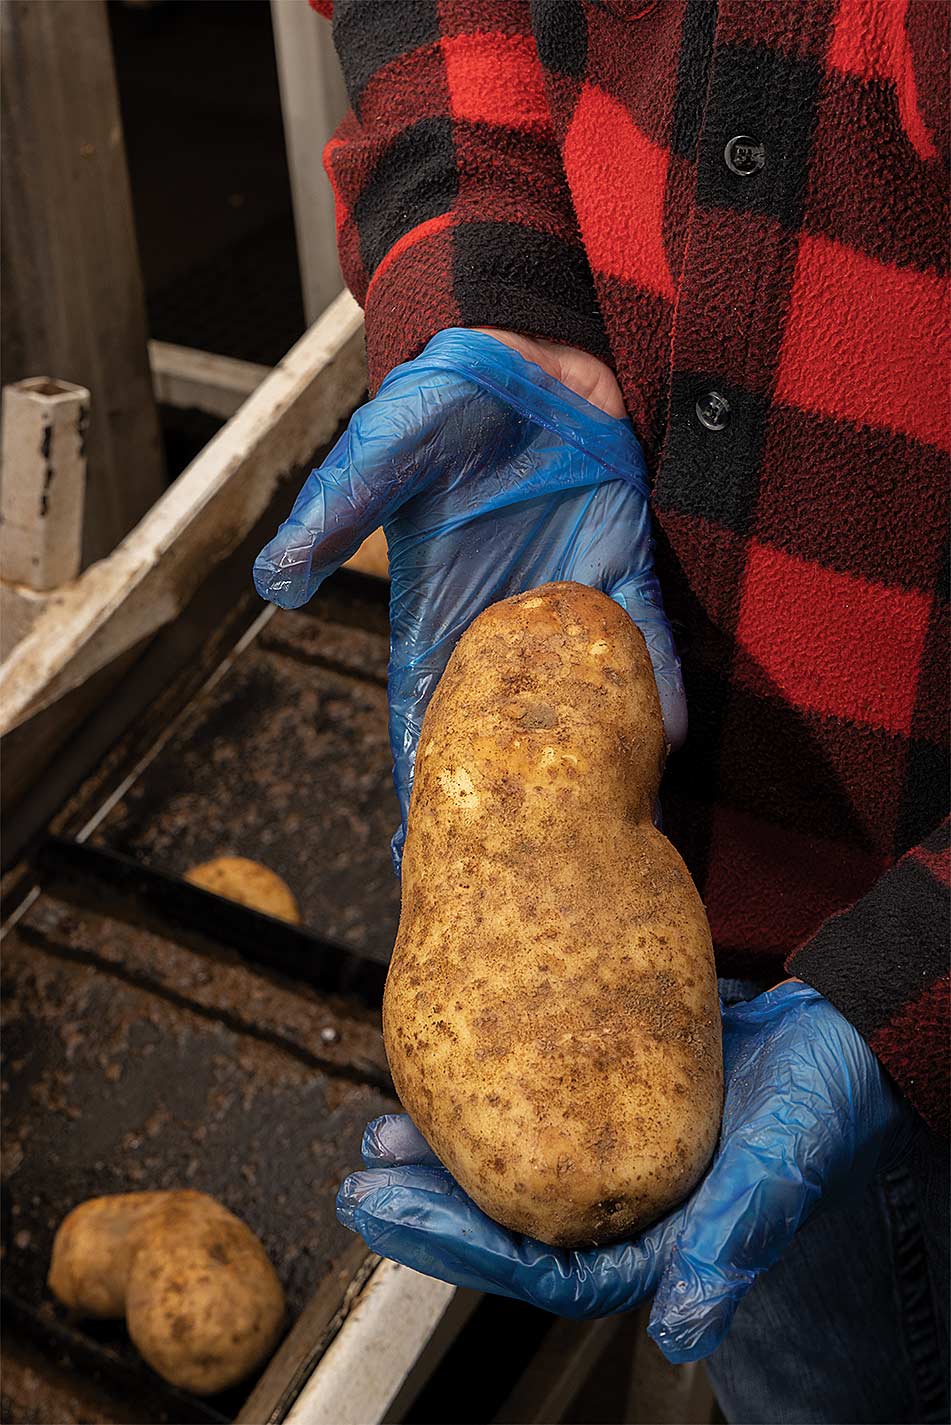 a large potato